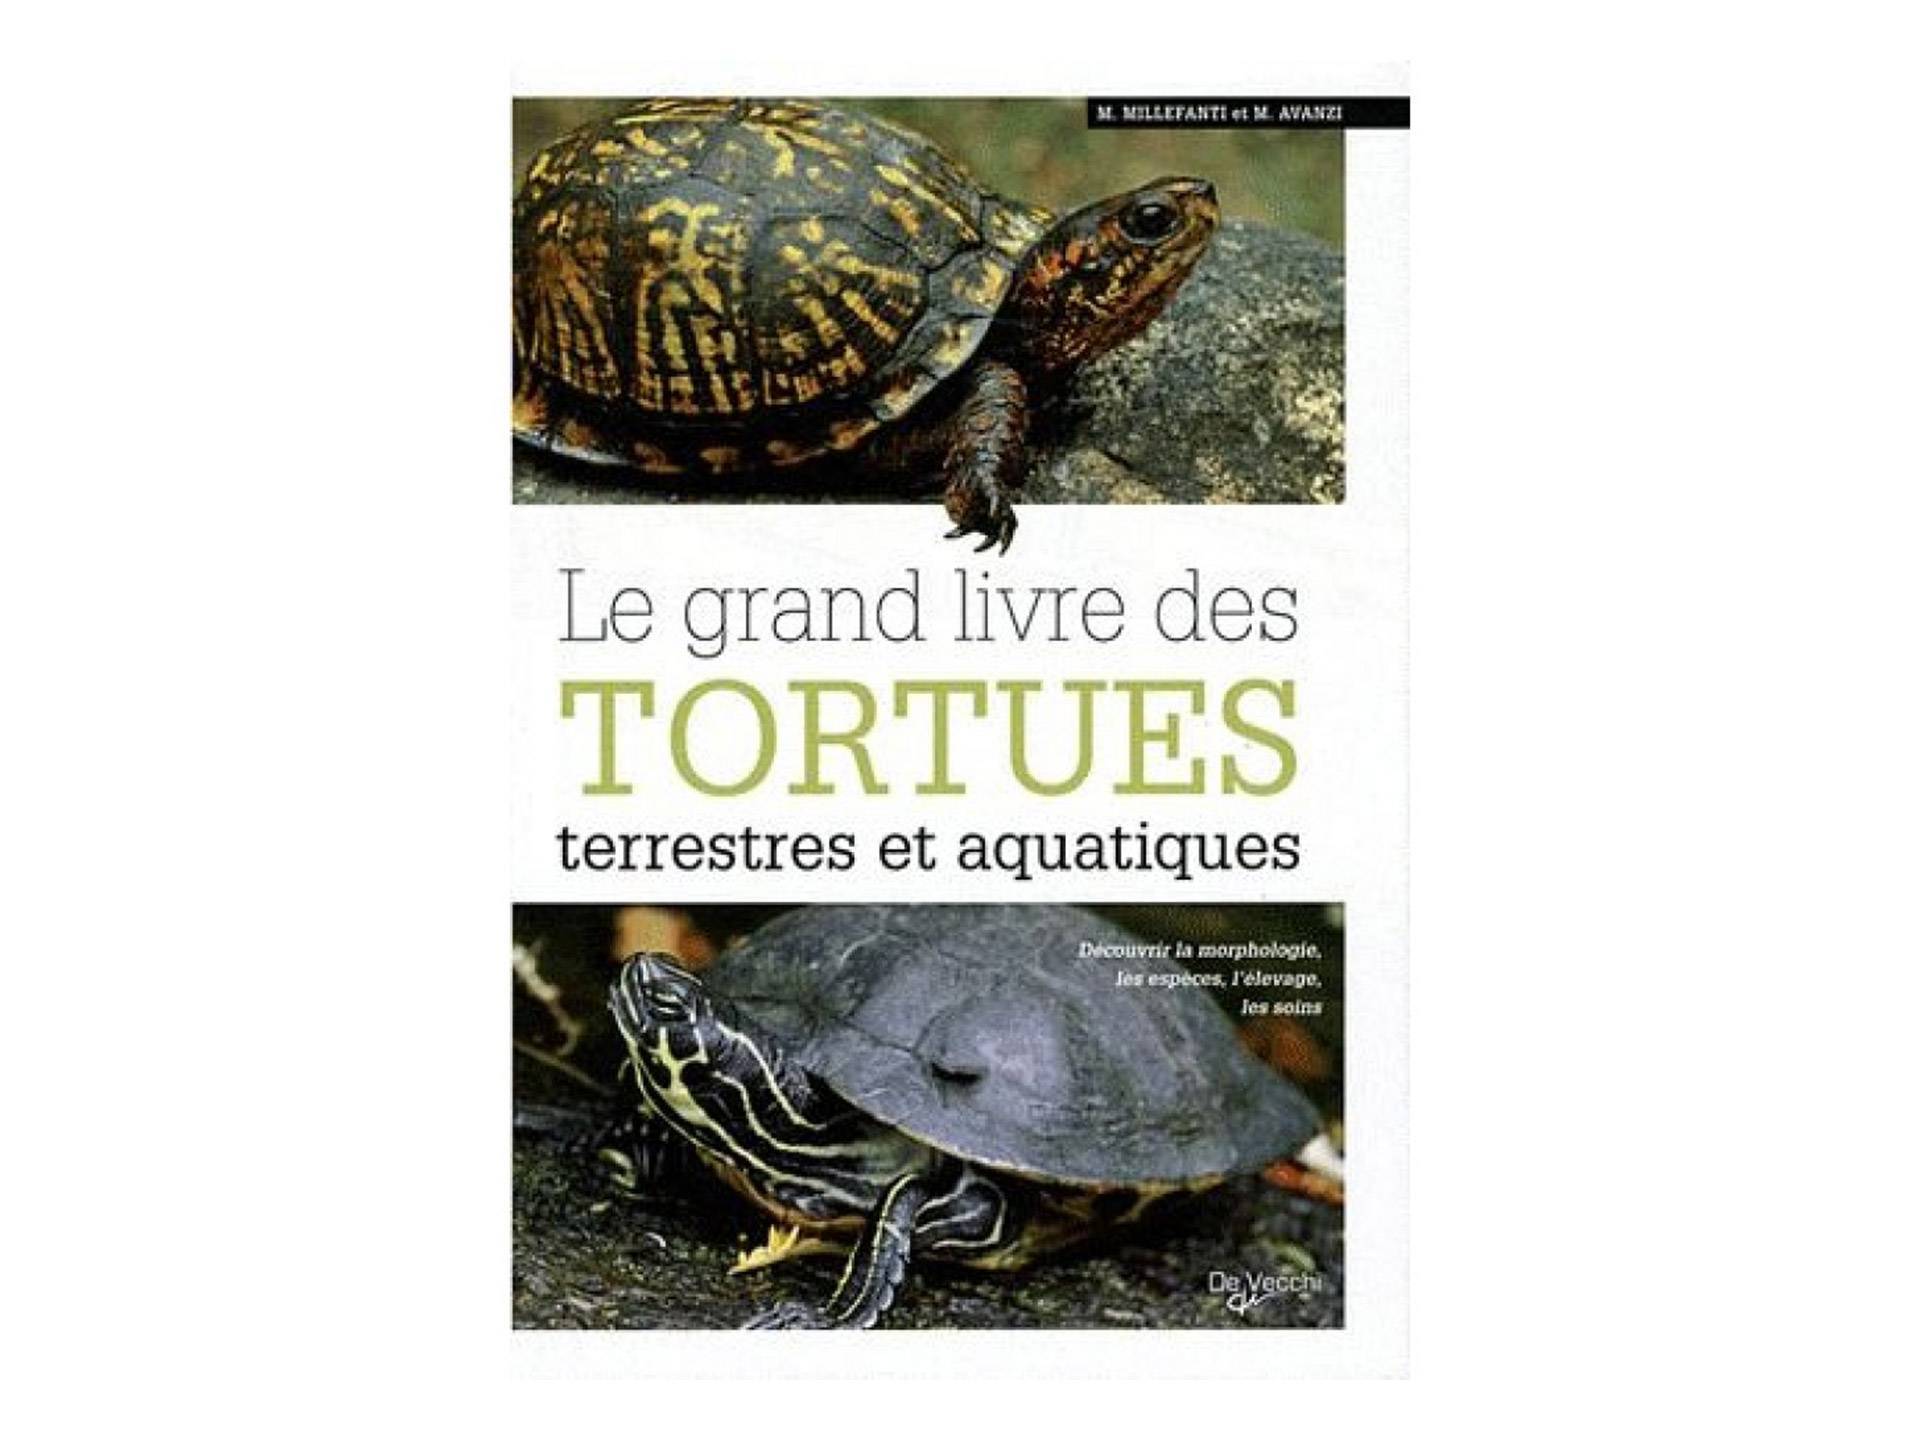 Le grand livre des tortues terrestres et aquatiques Massimo Millefanti huitième